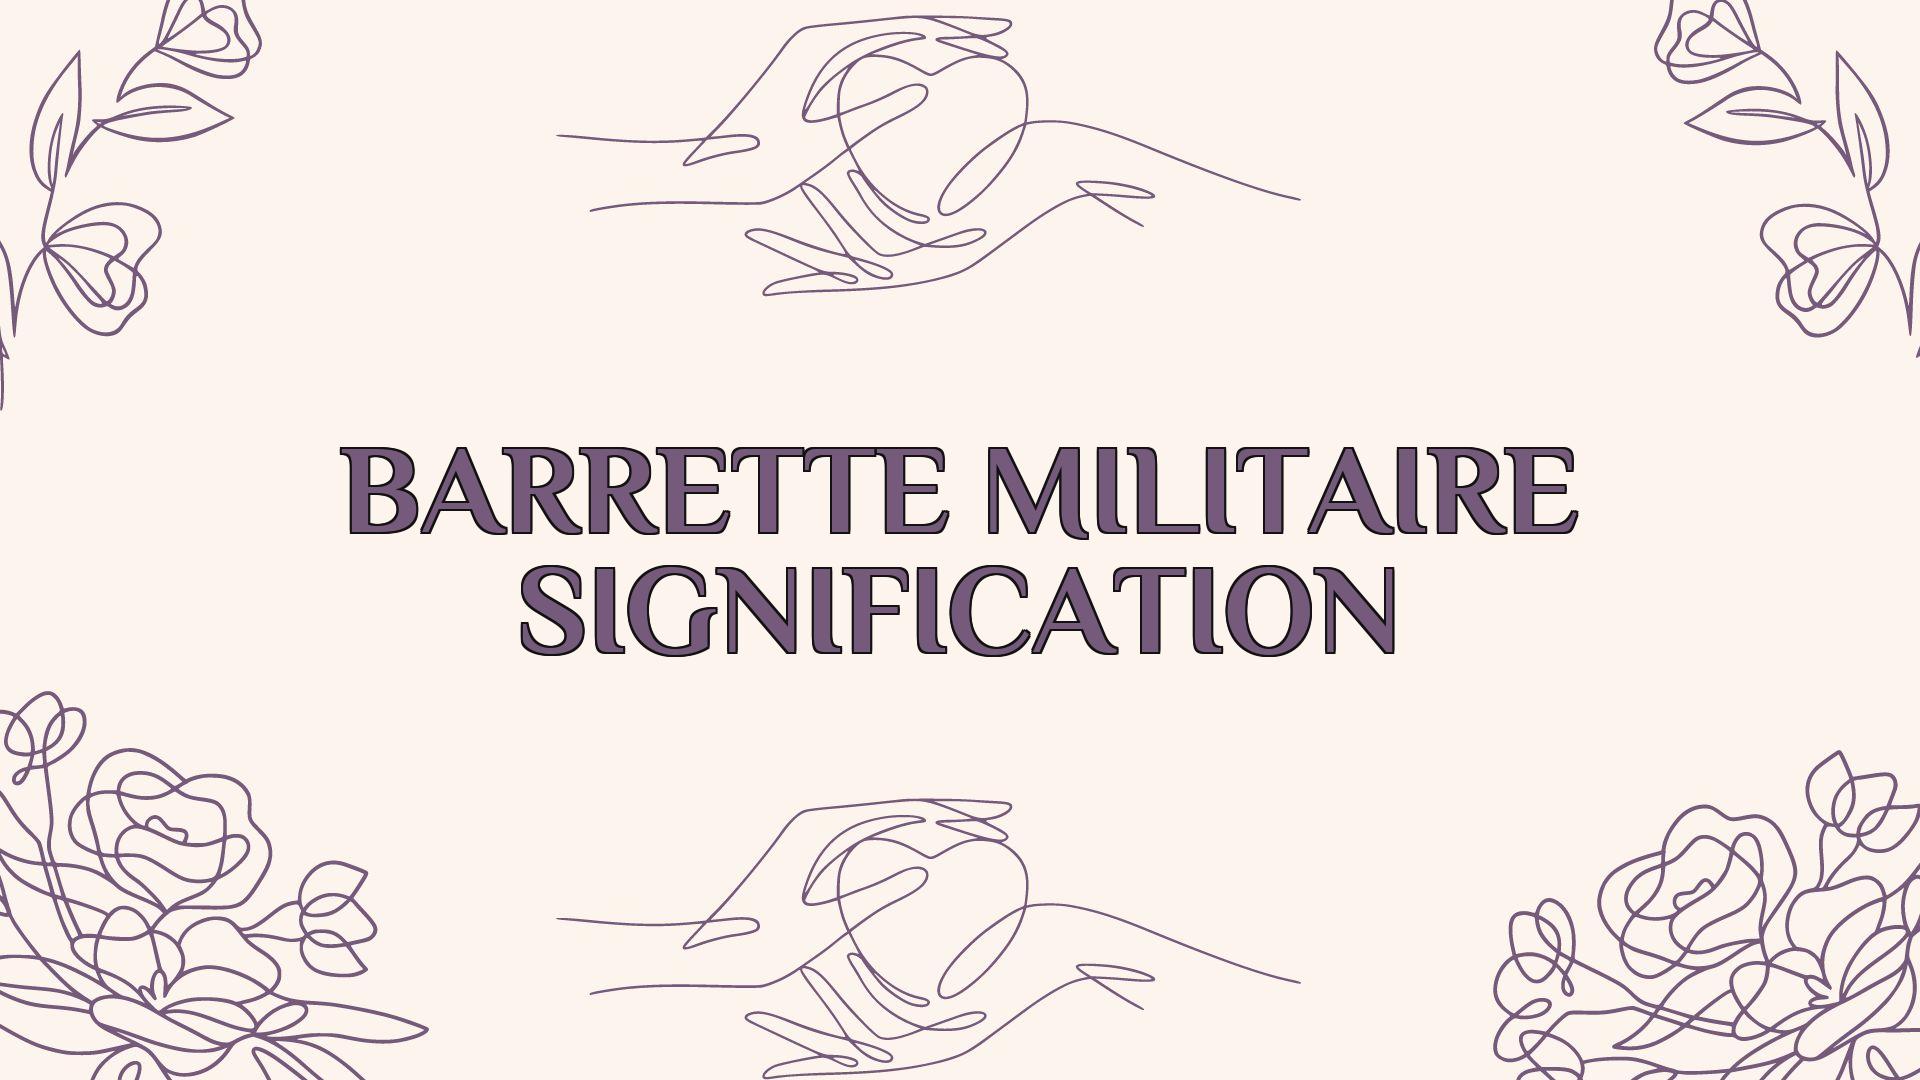 barrette militaire signification